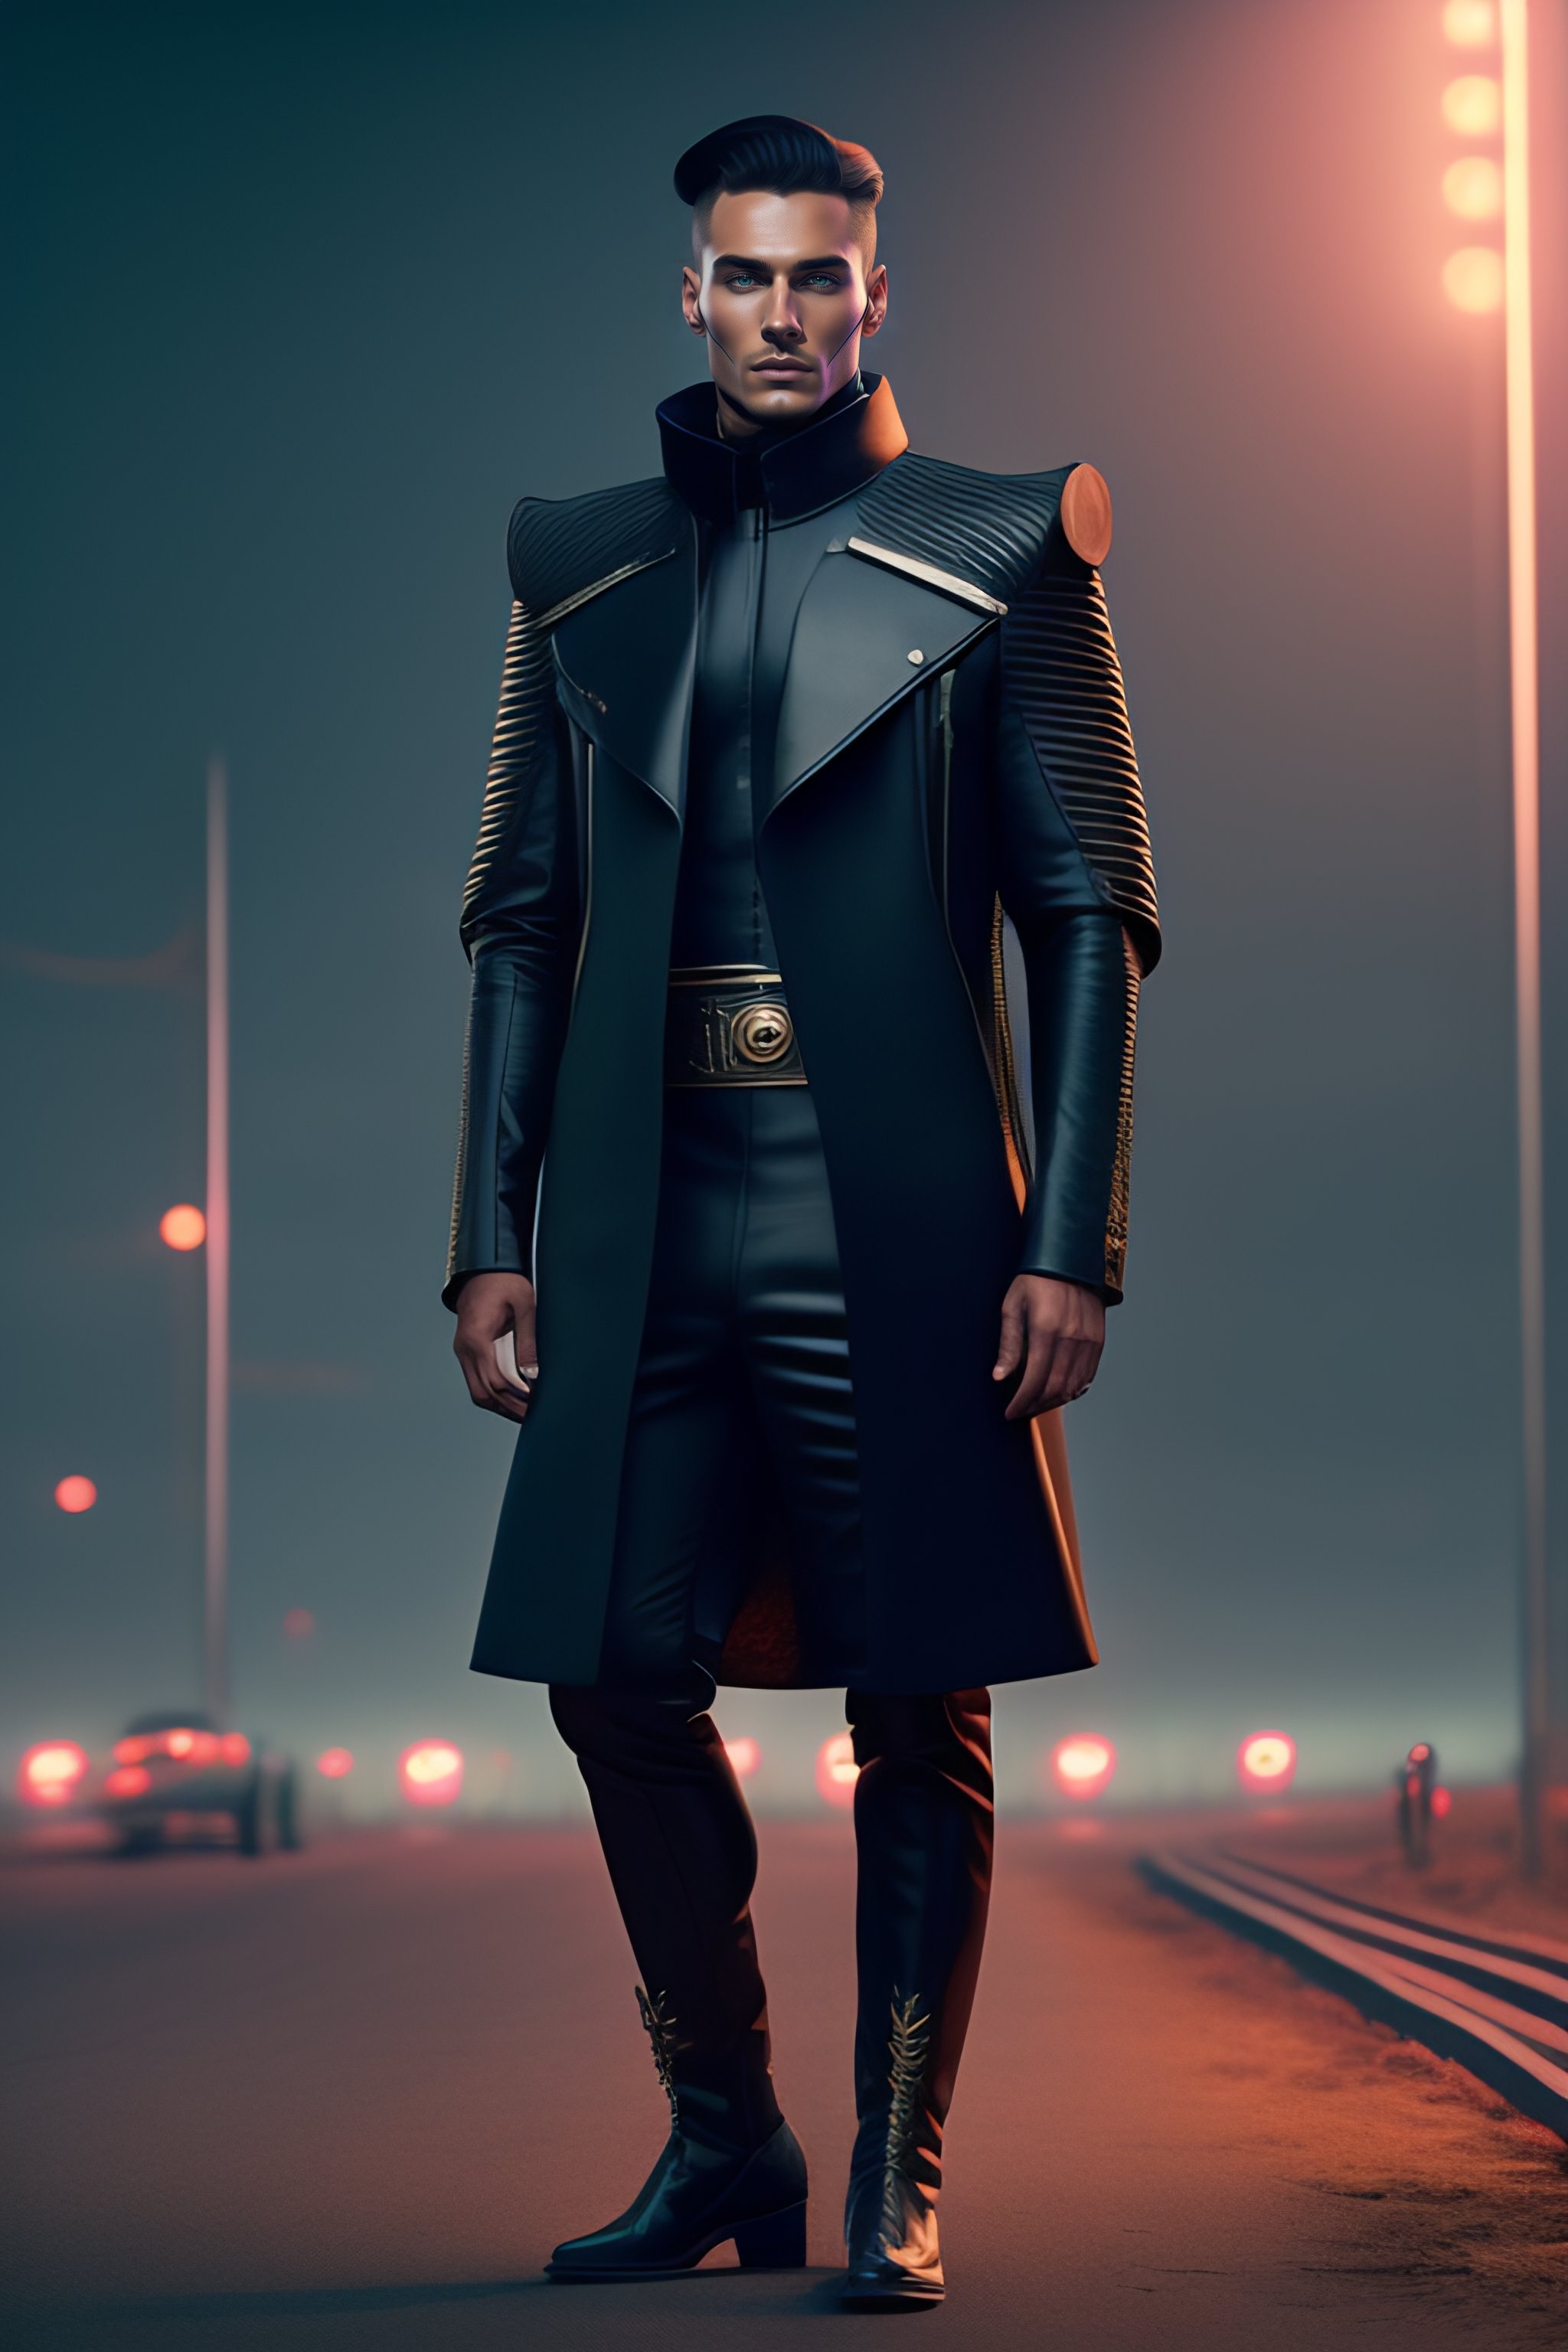 Lexica - Simon stalenhag style 1920s futuristic Futuristic Leather man's  Clothing, 8k resolution, hyper realstic ,